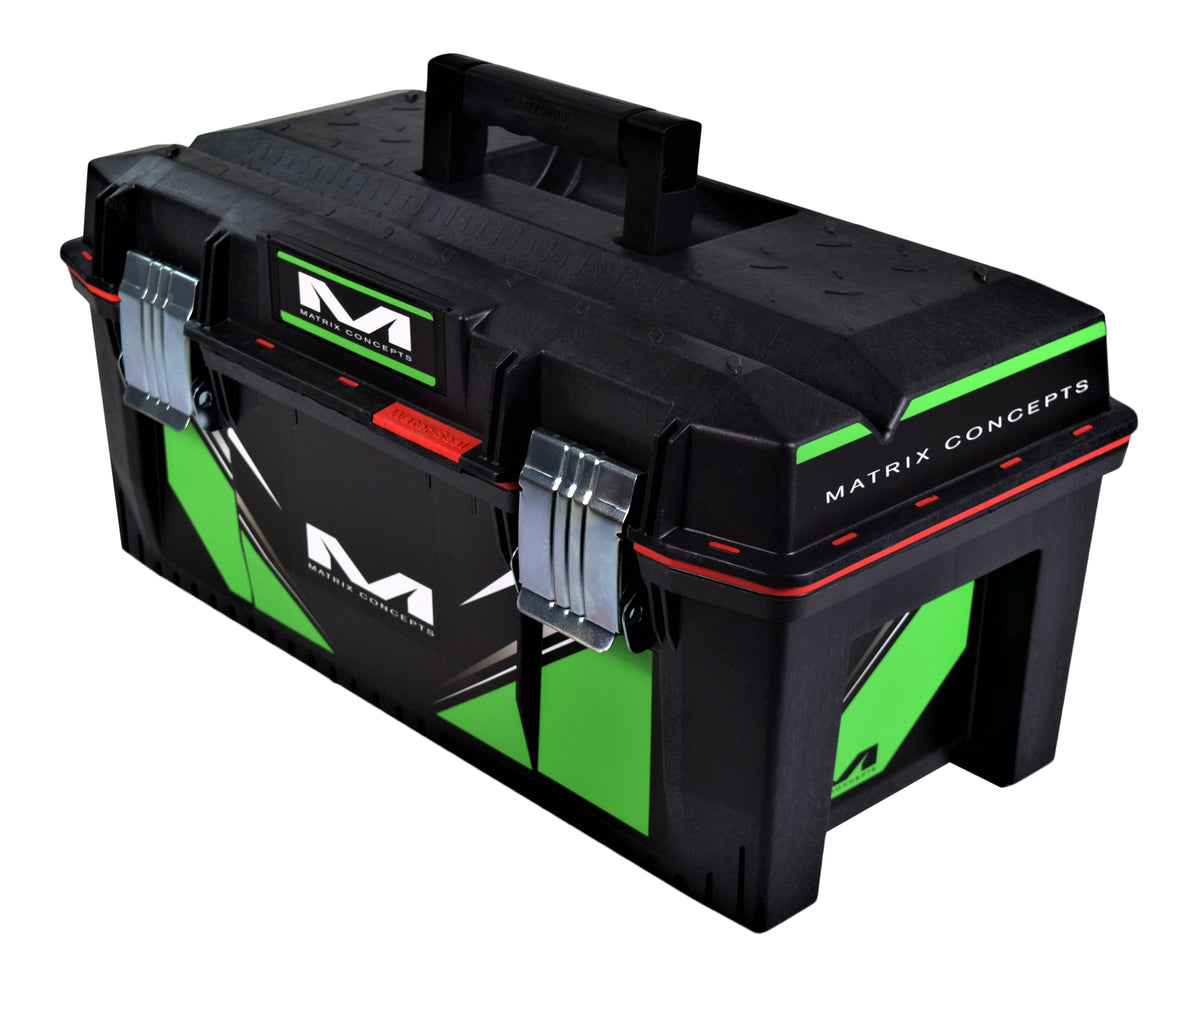 Matrix Concepts M11 RACE MECHANIC BOX Black/Green